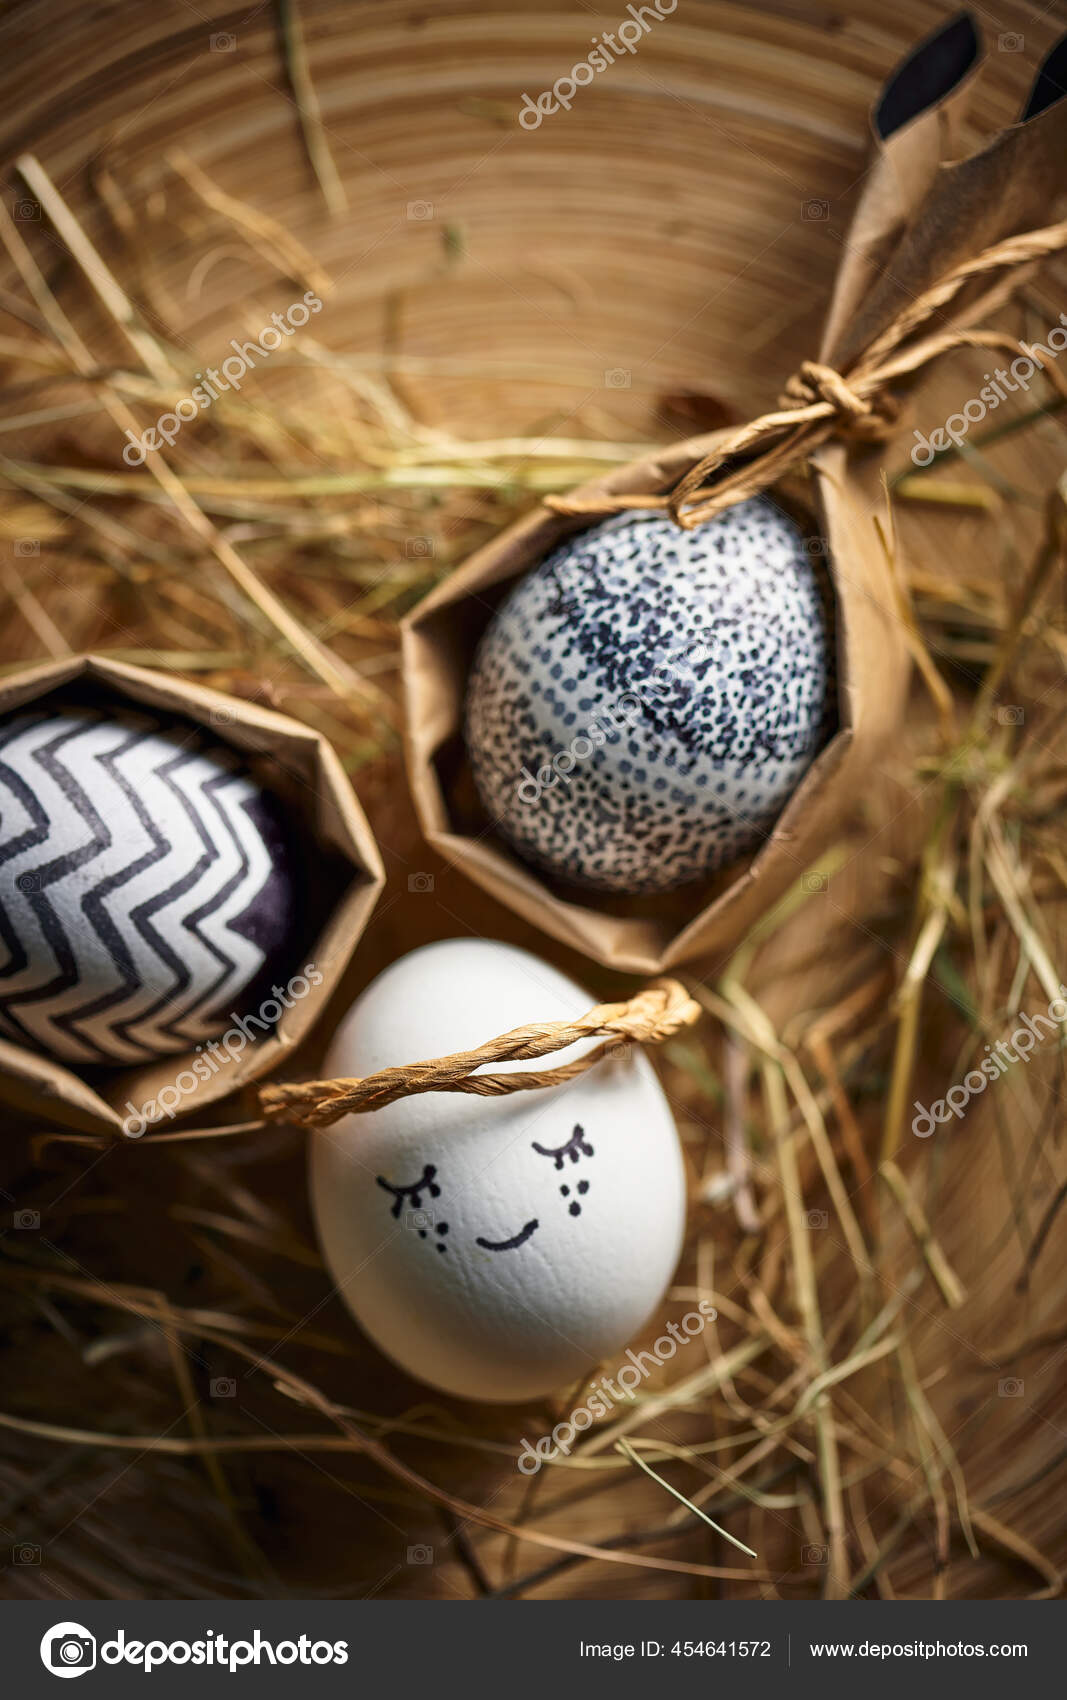 https://st2.depositphotos.com/28636318/45464/i/1600/depositphotos_454641572-stock-photo-easter-eggs-on-straw-cute.jpg